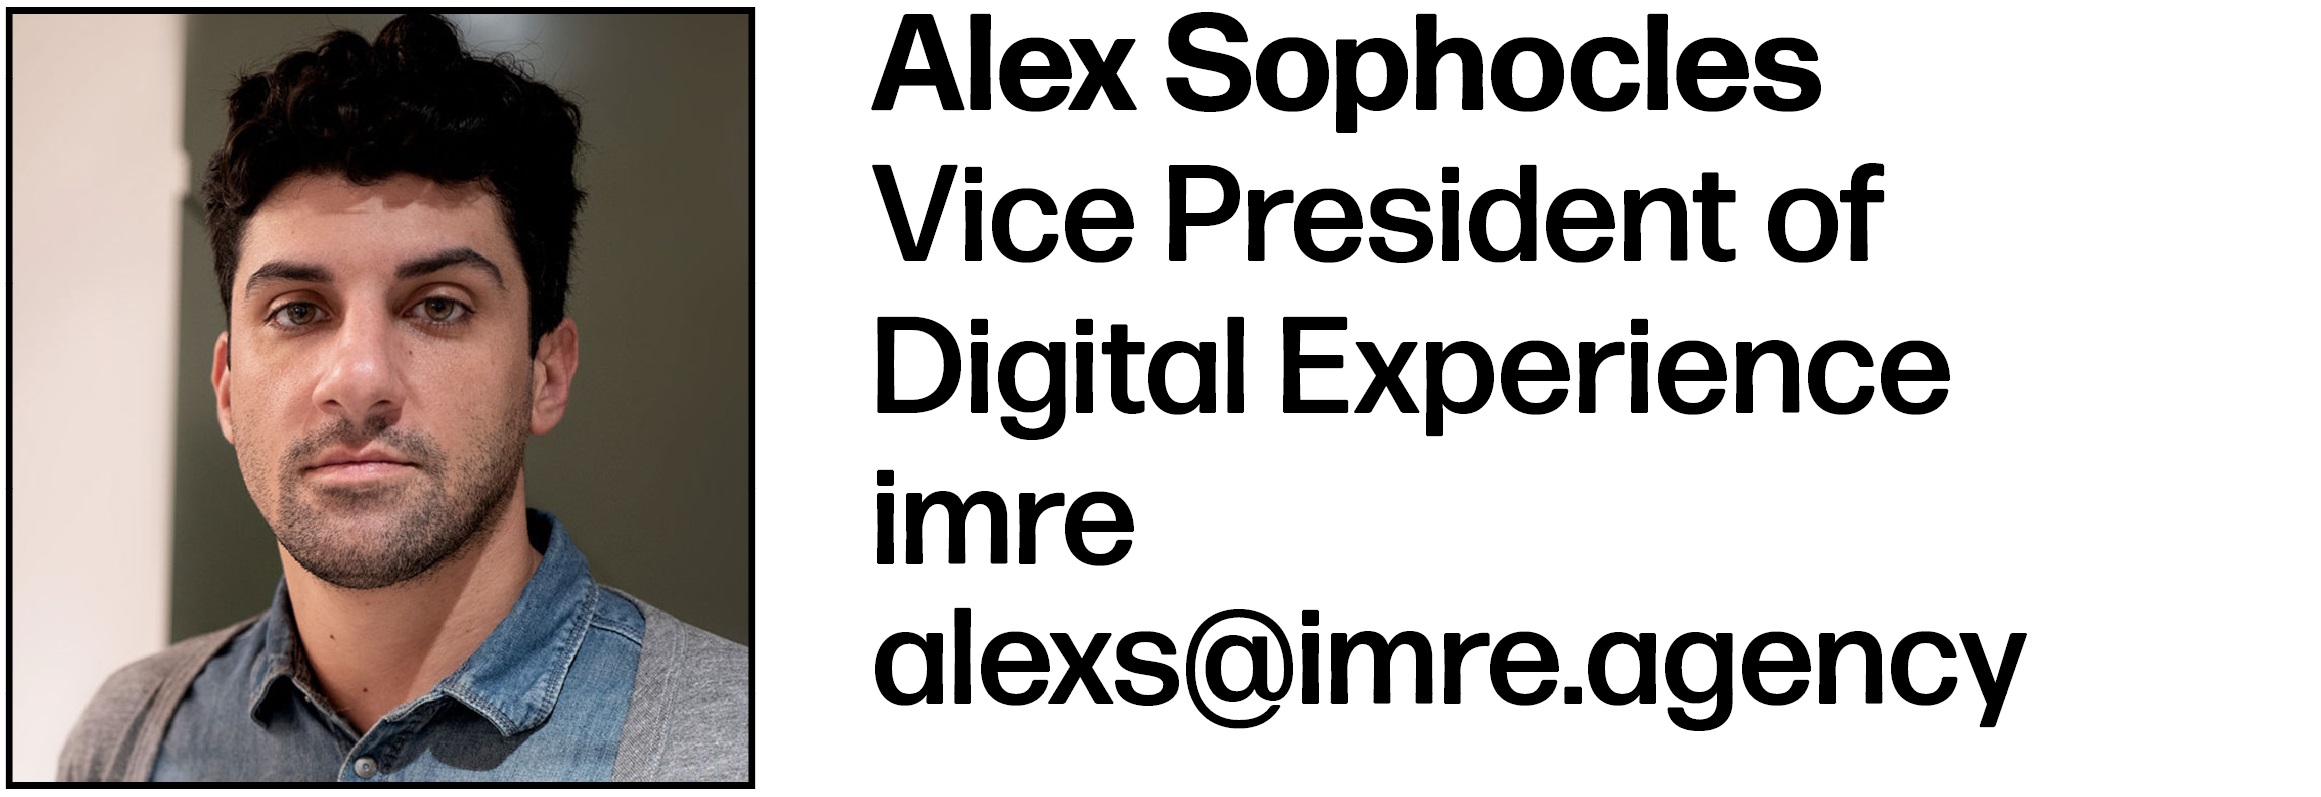 Alex Sophocles Vice President of Digital Experience imre alexs@imre.agency 